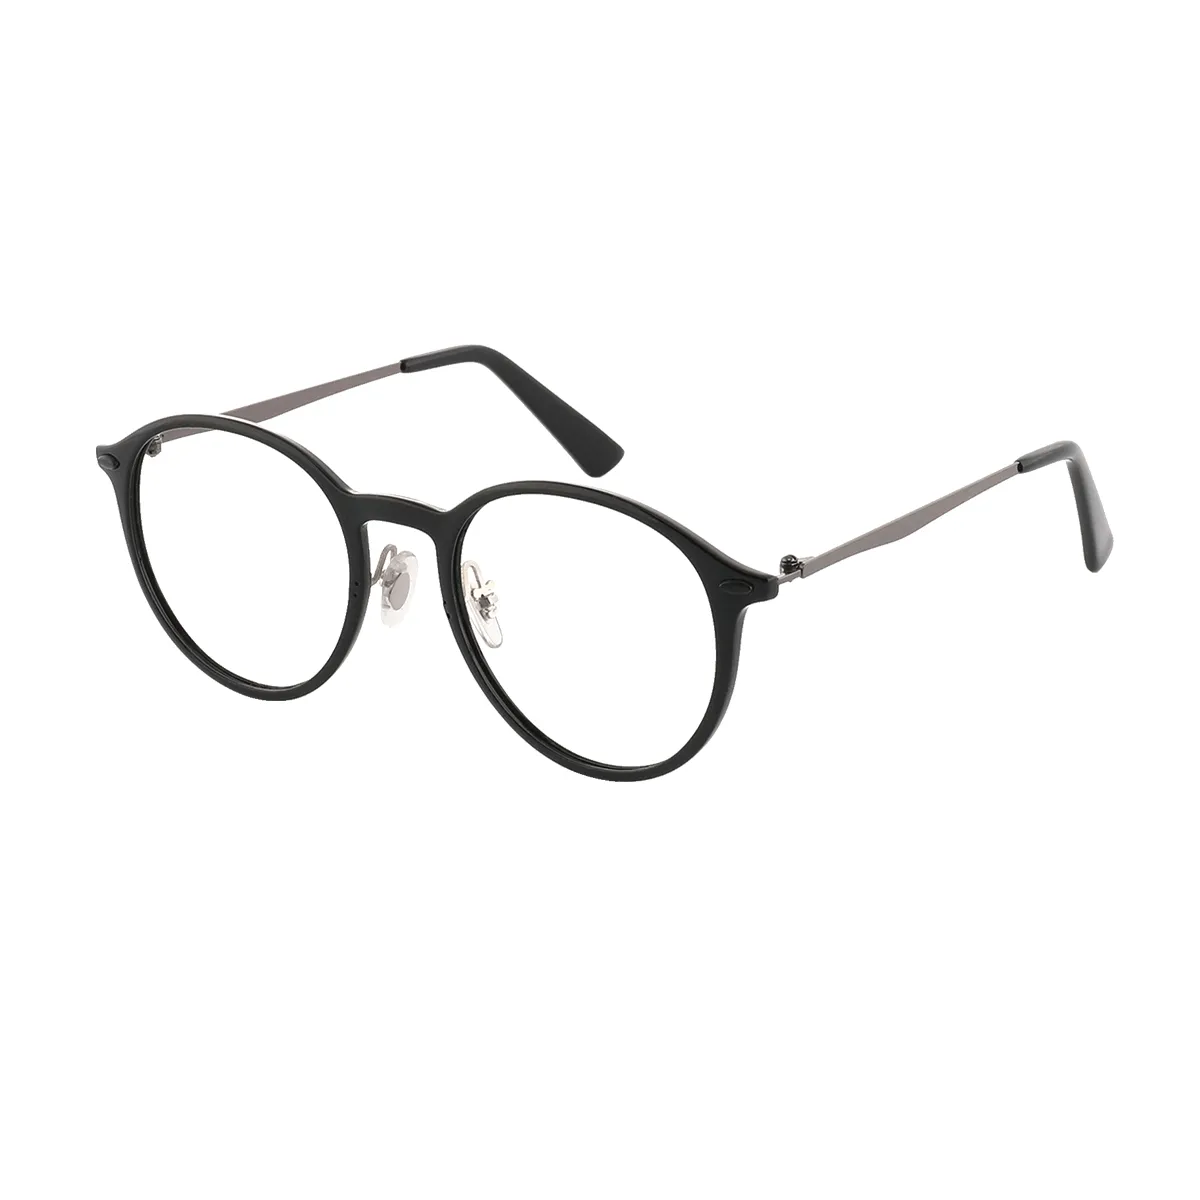 Hamm - Oval Black-Silver Glasses for Men & Women - EFE